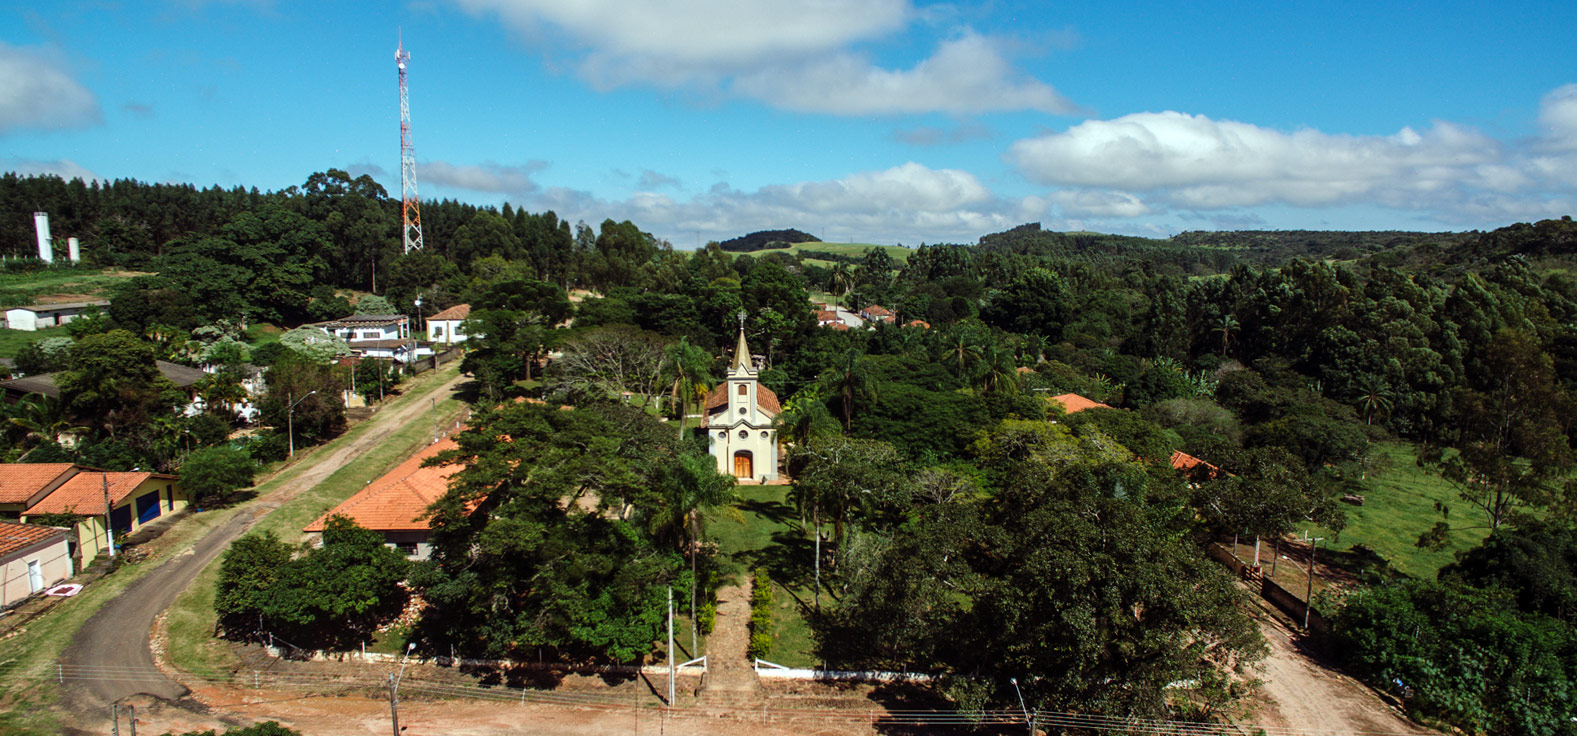 Vila do Itaqueri - Itirapina | Serra do Itaqueri